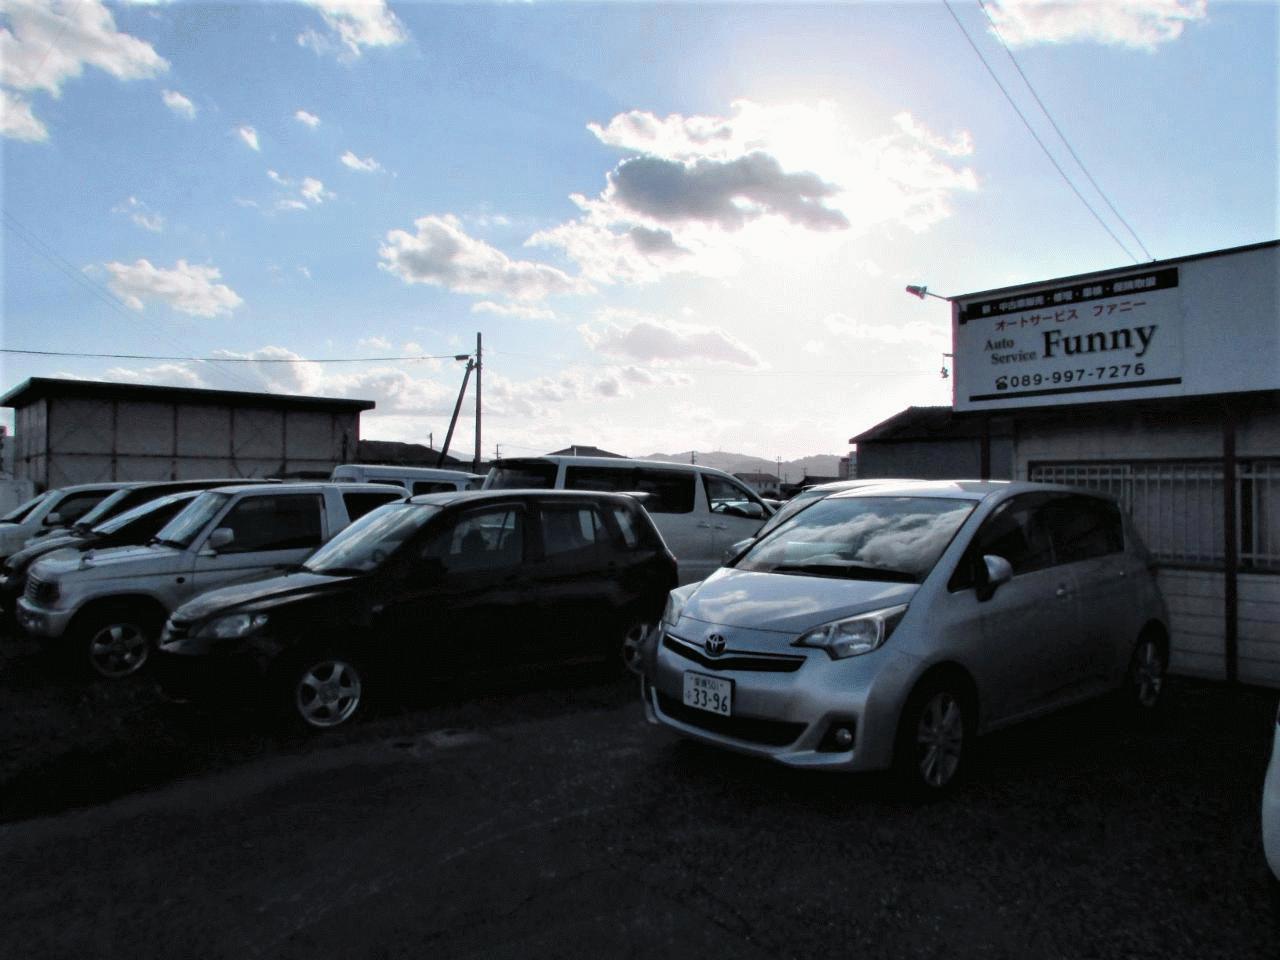 Auto Service Funny オートサービスファニー 愛媛県松山市 Mjnetディーラー お店の情報